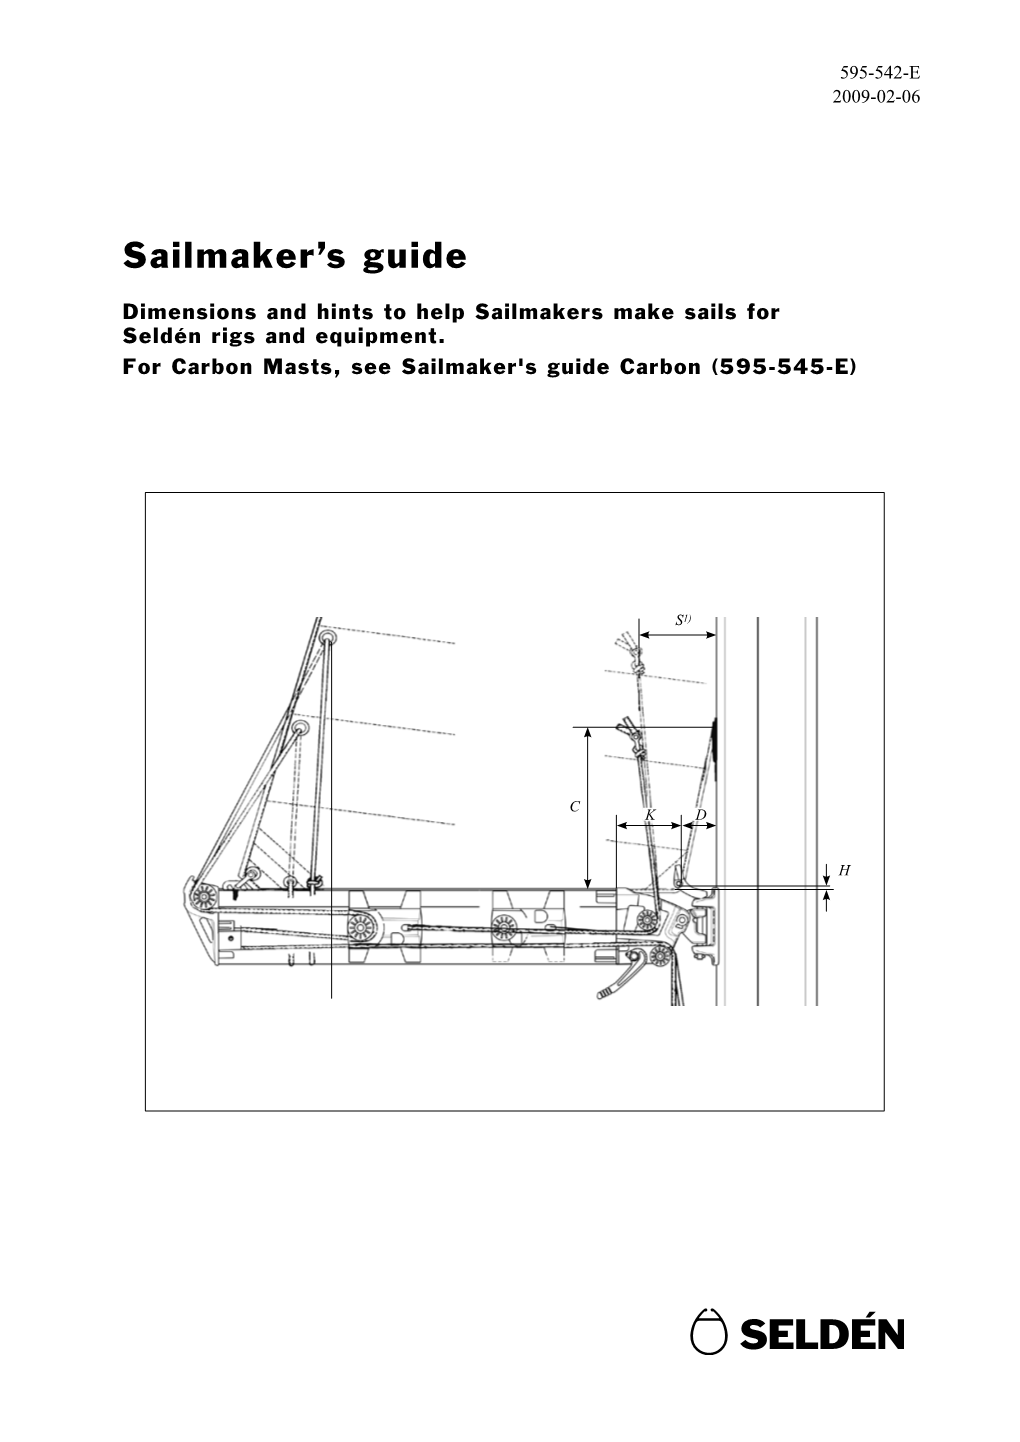 Sailmaker's Guide Carbon (595-545-E)